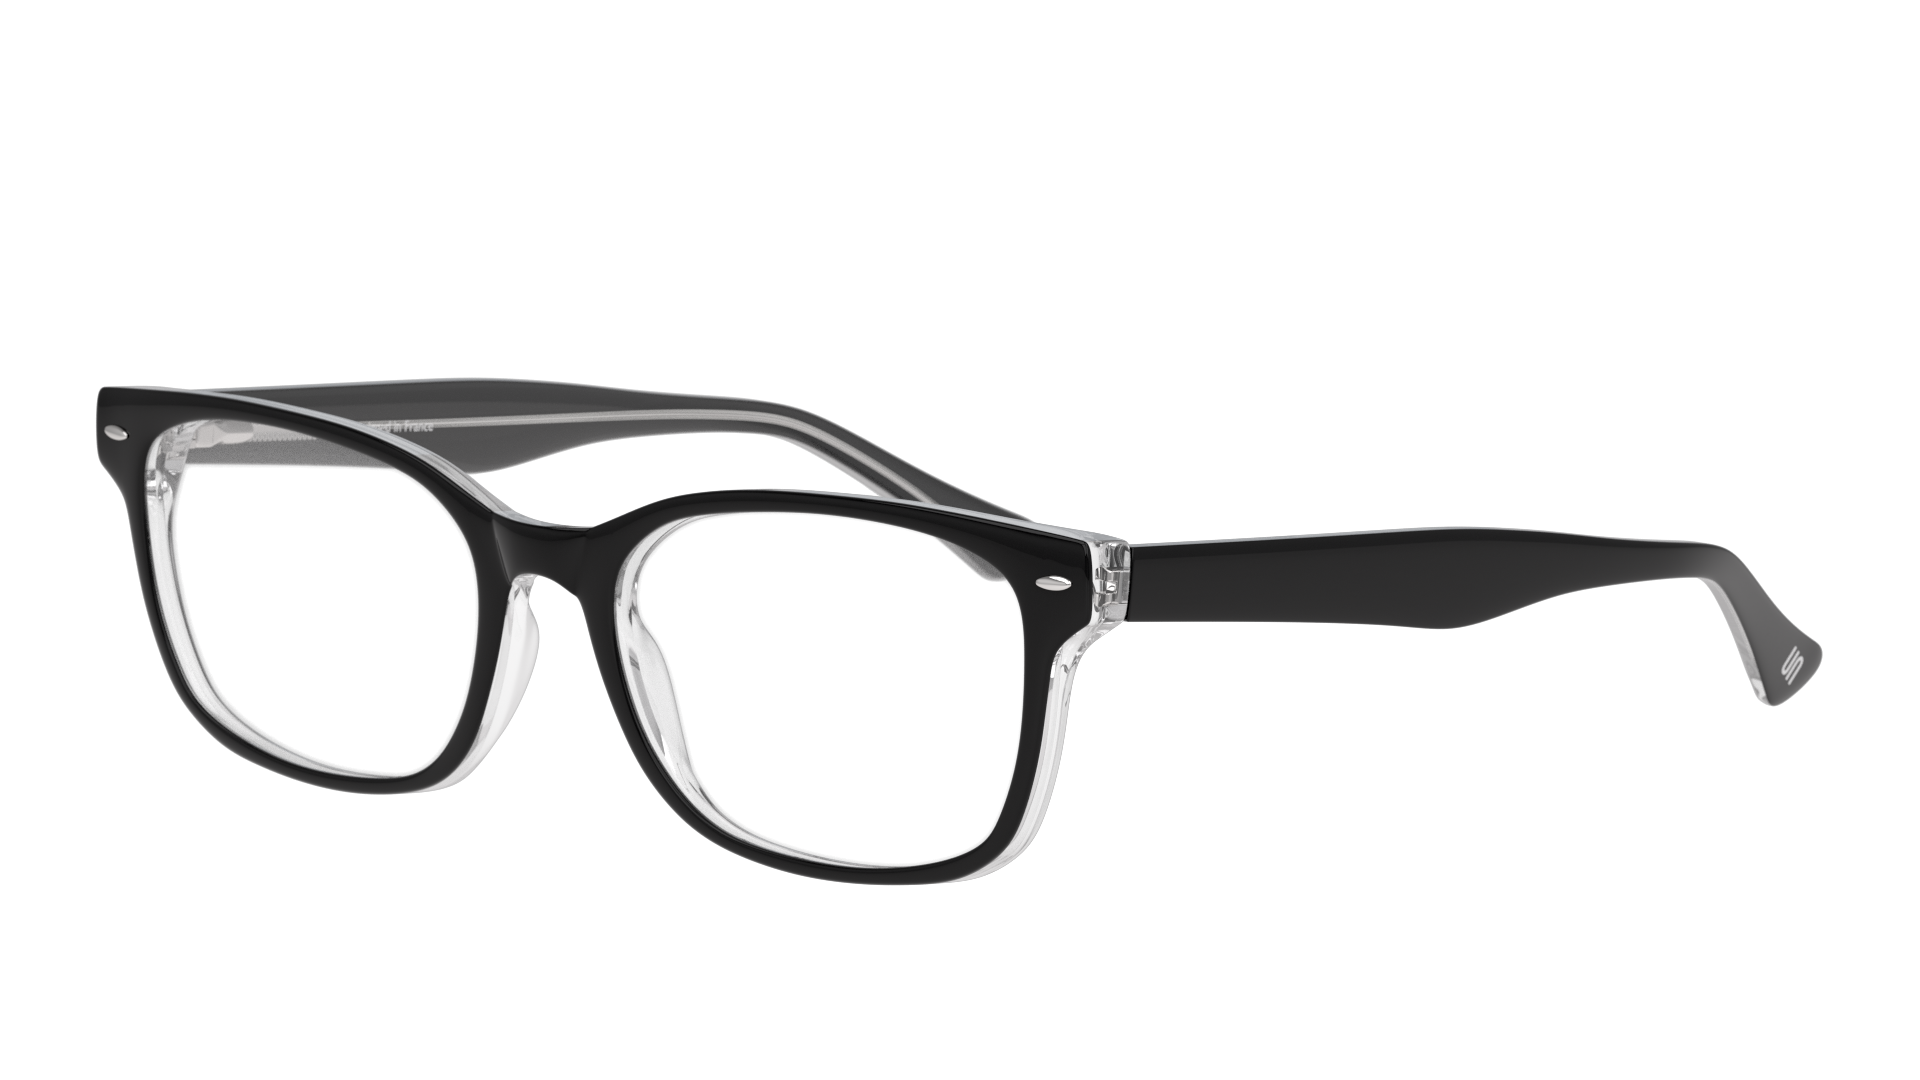 Angle_Left01 Unofficial UNOM0012 (BT00) Glasses Transparent / Black